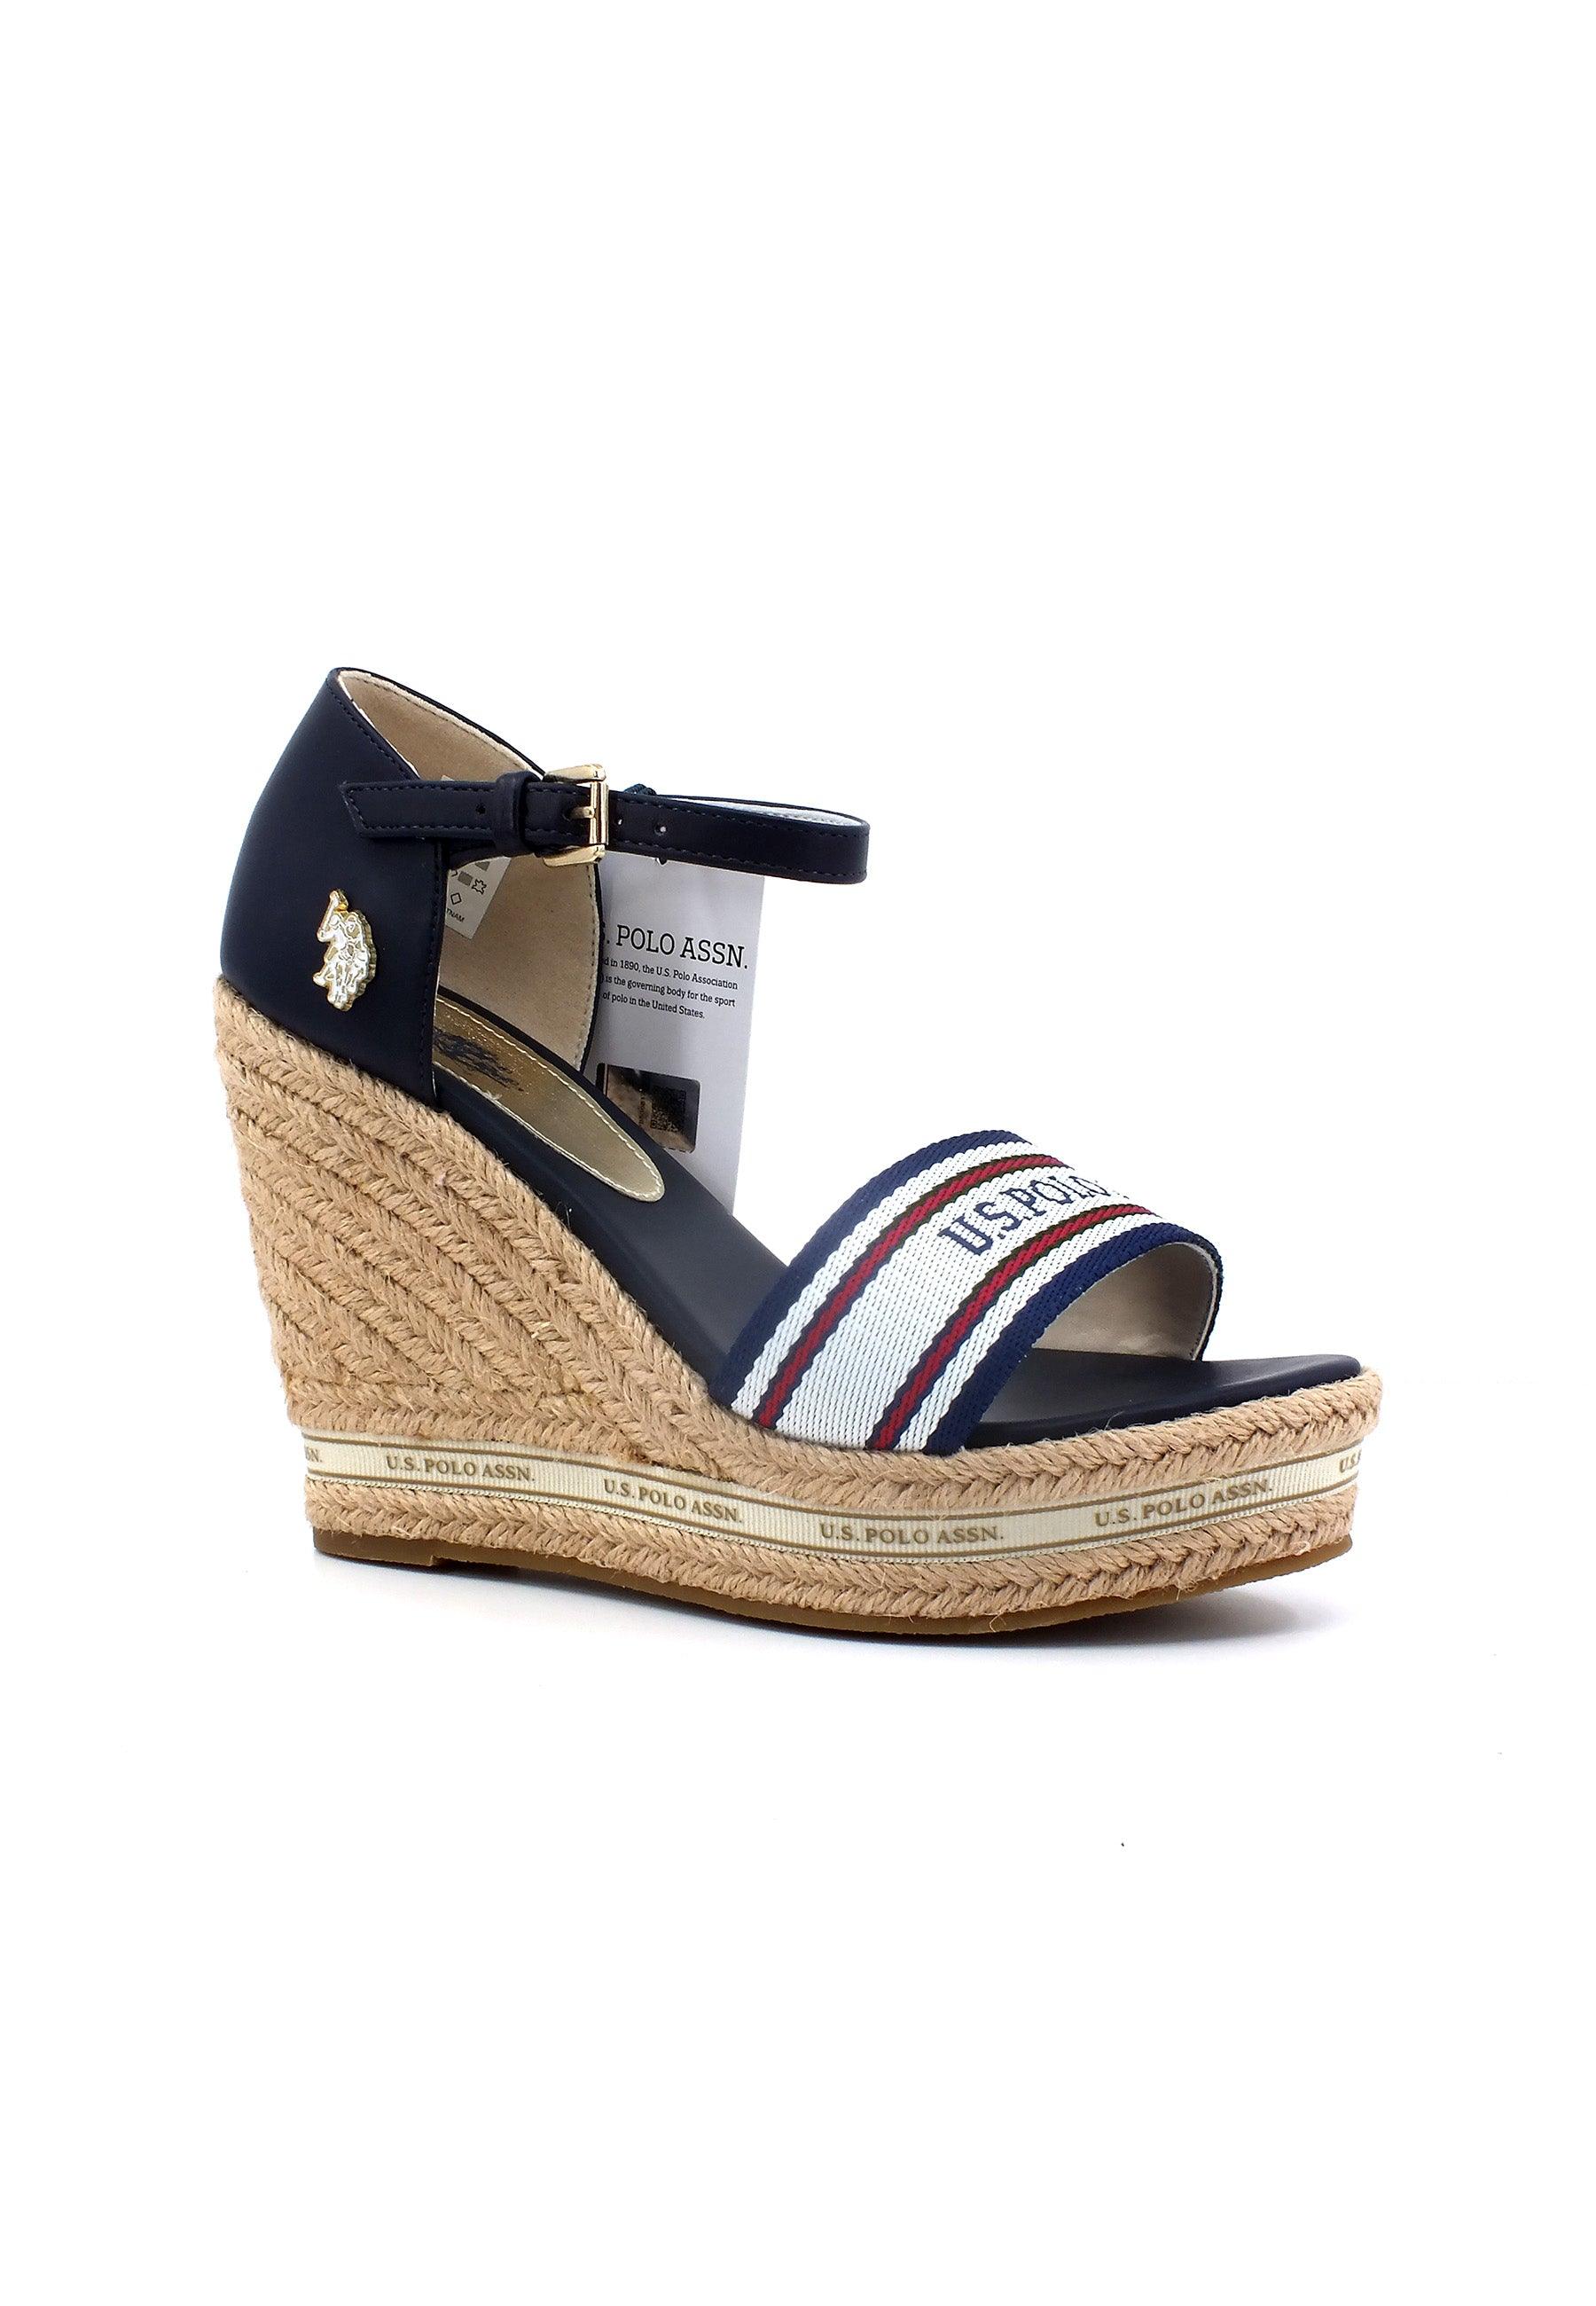 U.S. POLO ASSN. Sandalo Zeppa Donna Blu AYLIN009 - Sandrini Calzature e Abbigliamento